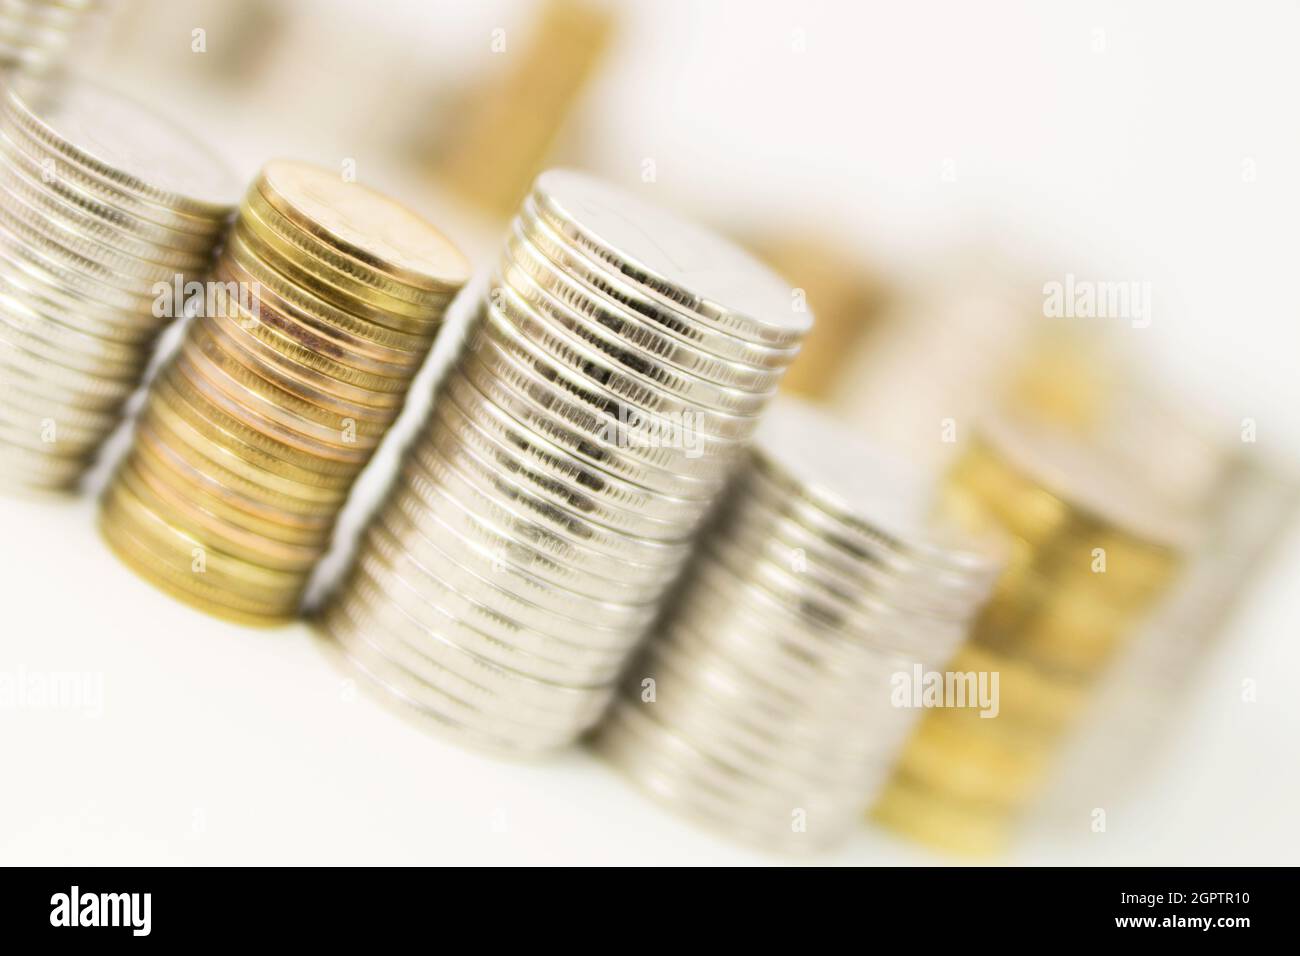 Columns of various metal coins Stock Photo